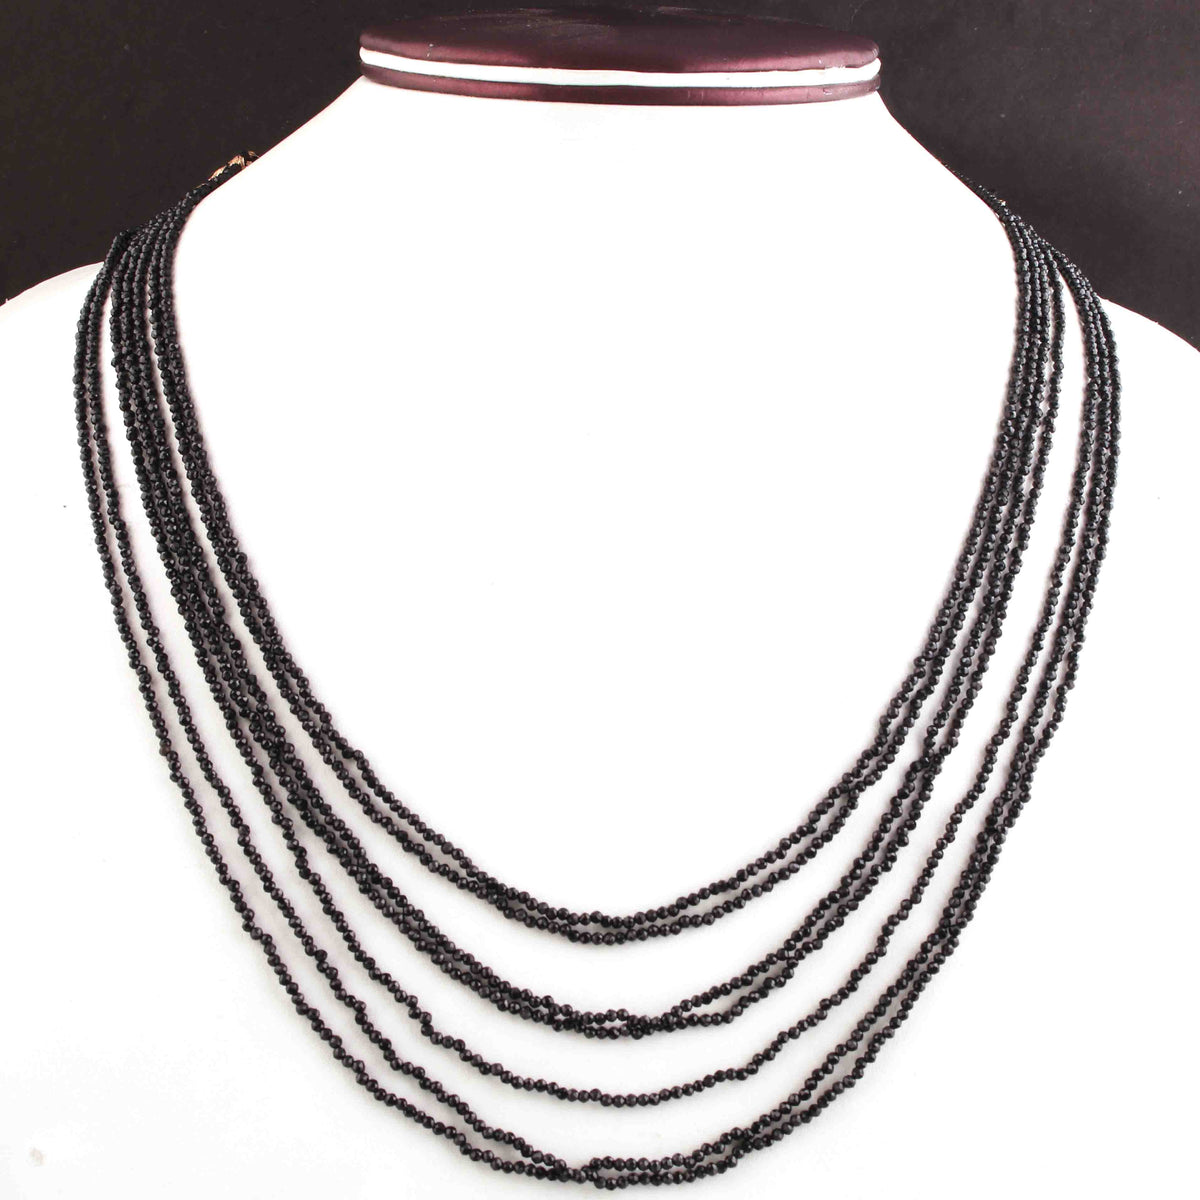 Details about  / Natural Black Spinel Rondelle Faceted Gemstone Beads 3.5 mm 17 /"Strand Necklace